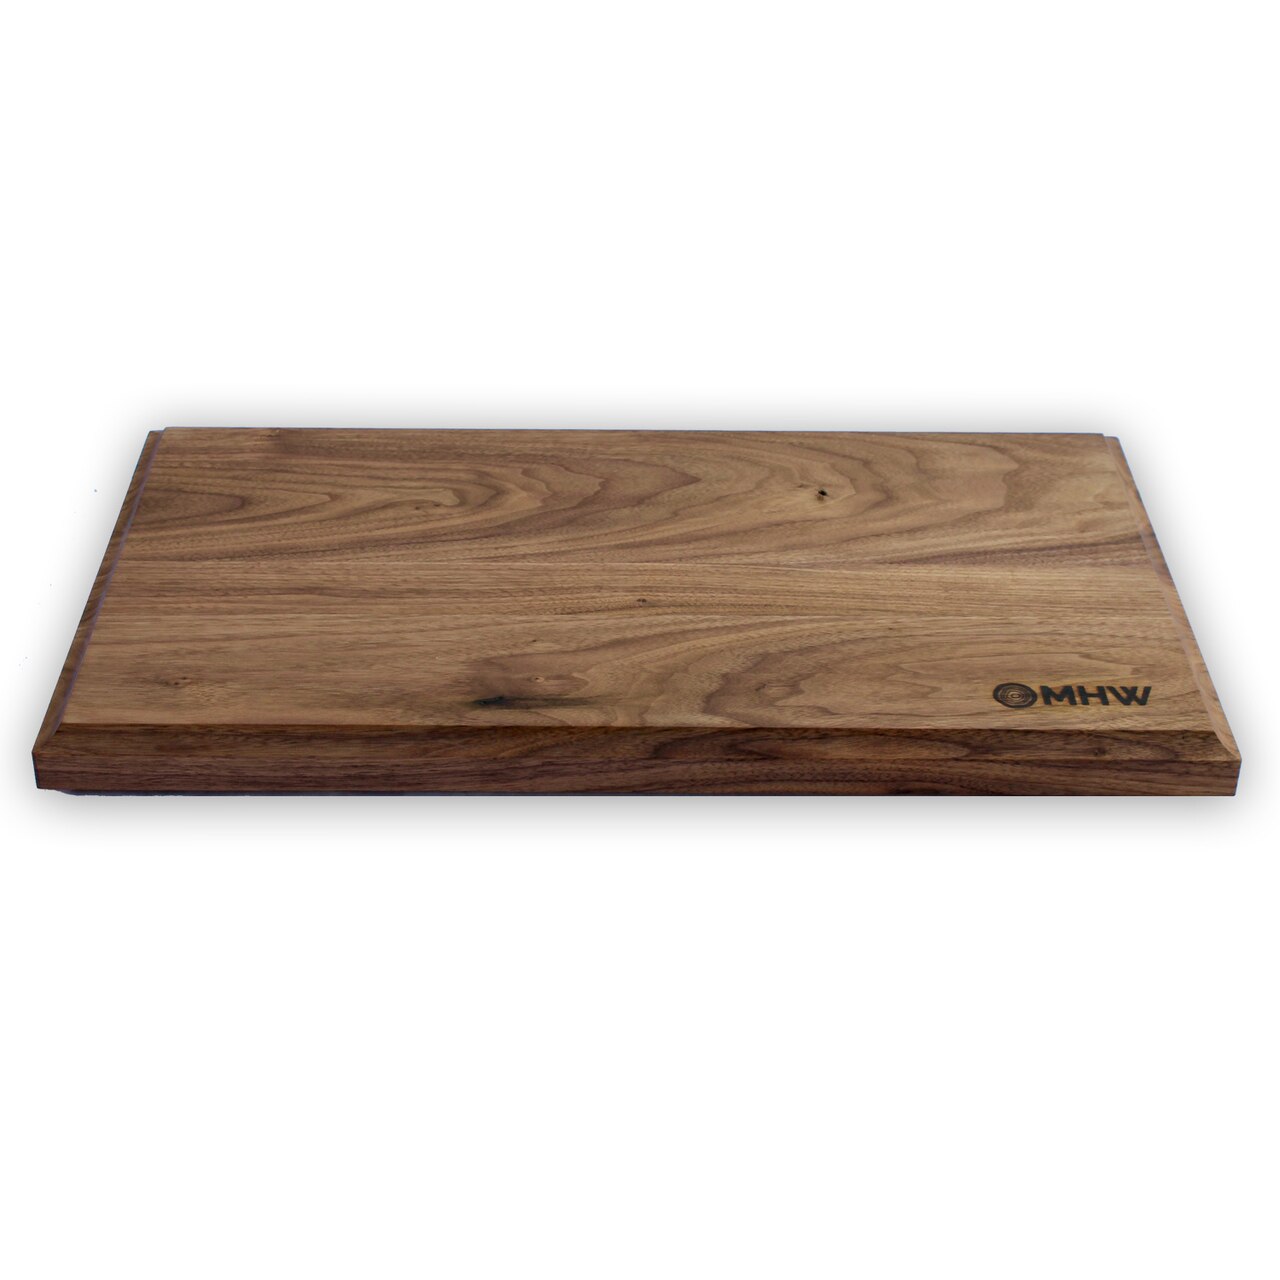 https://www.woodcuttingboardstore.com/wp-content/uploads/2020/06/18x20x1.5-Thick-Walnut-Wood-Cutting-Board-wFREE-Board-Butter7.jpg